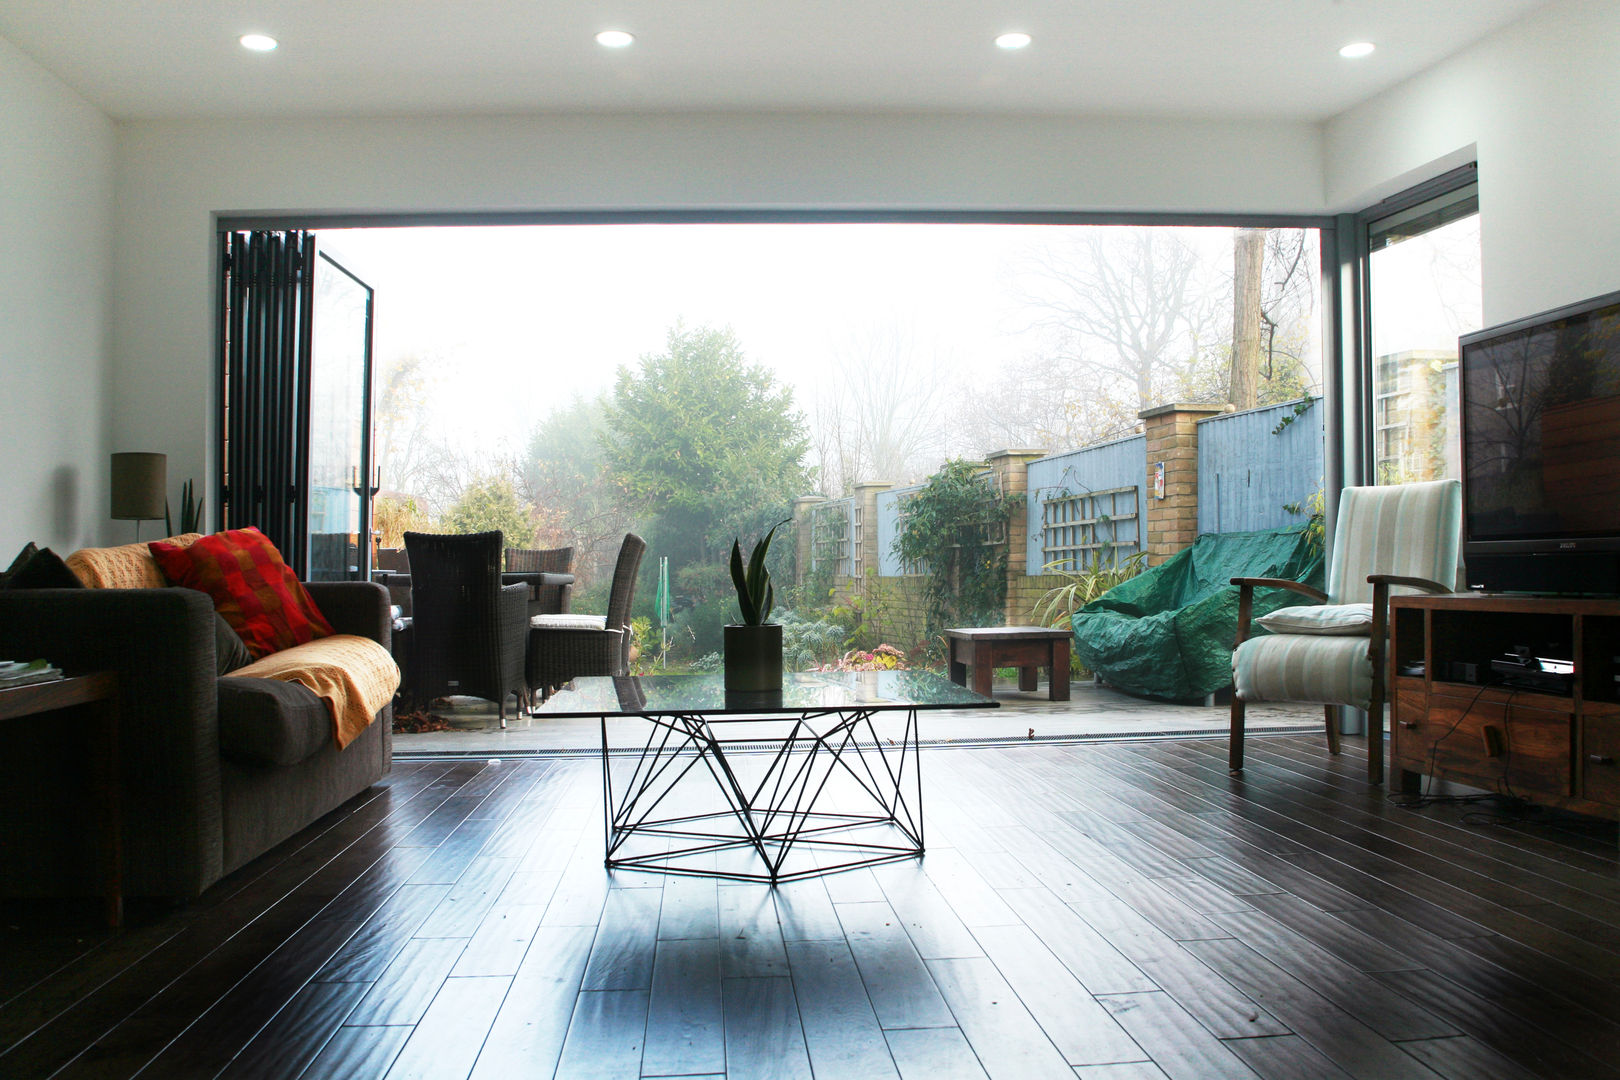 Brockley, Lewisham SE4, London | House extension GOAStudio London residential architecture limited Salas modernas